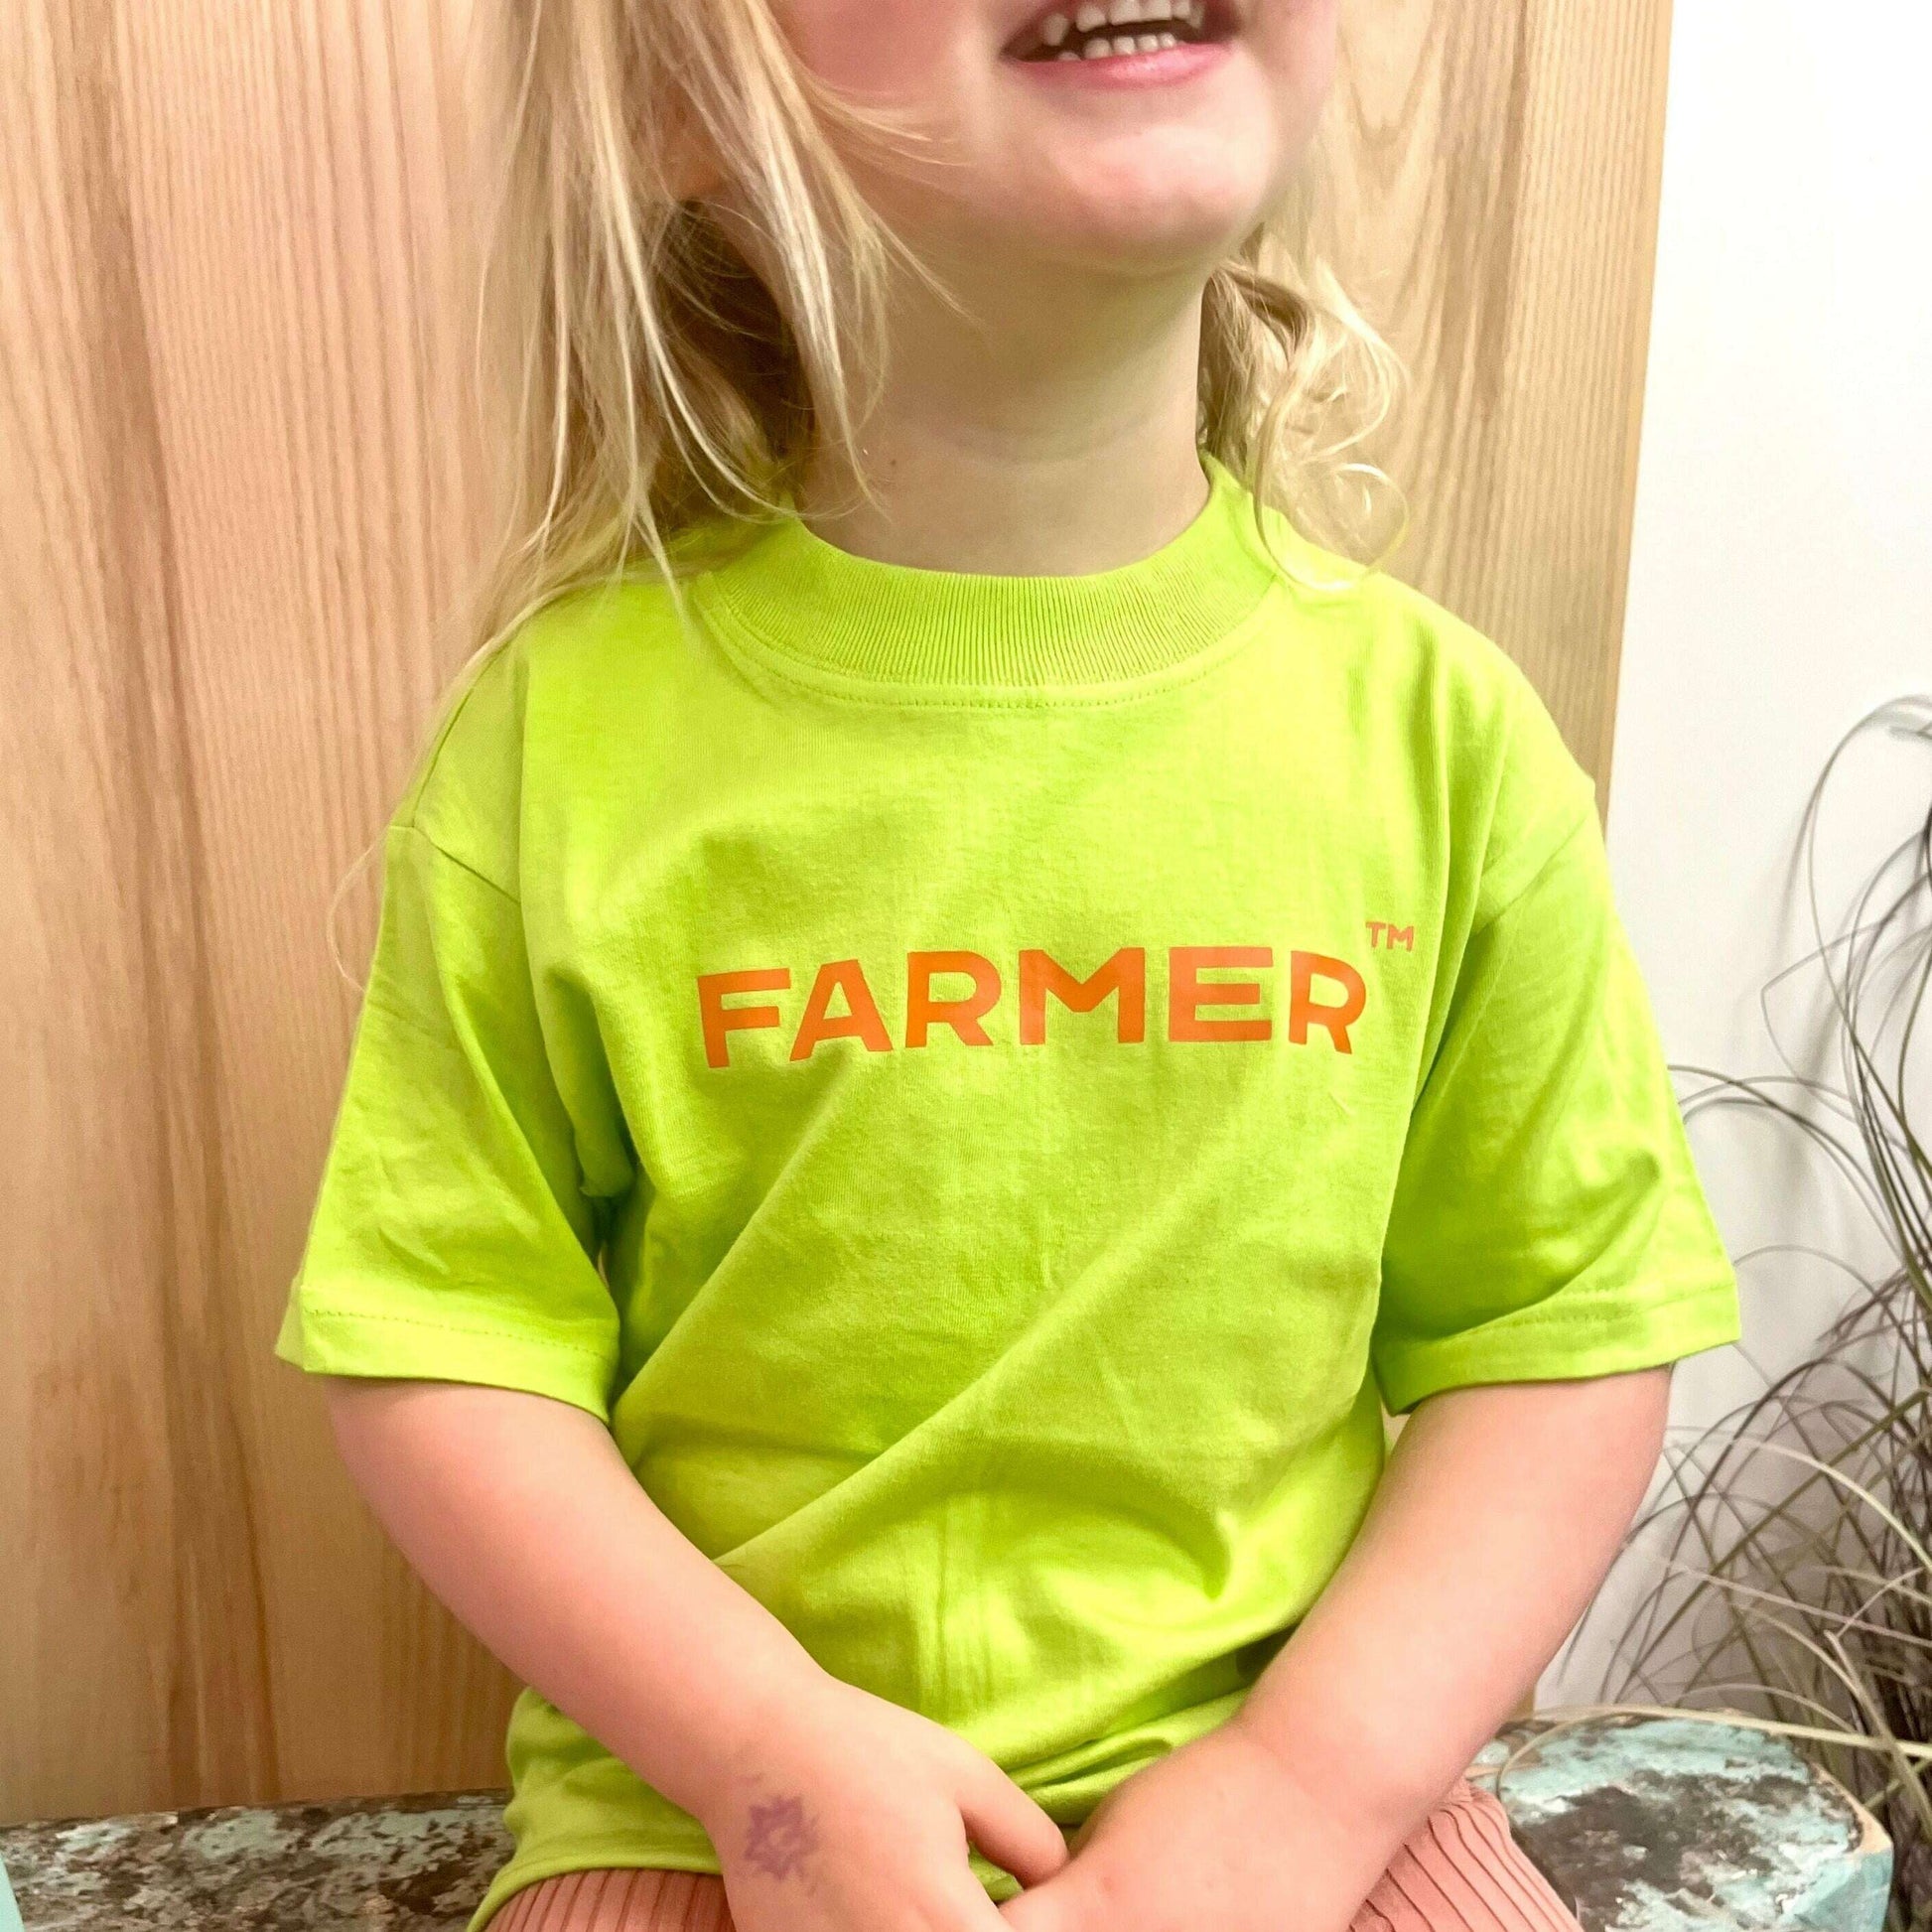 Farmer T Shirt, t shirts for farmers boys young farmer farm shirts